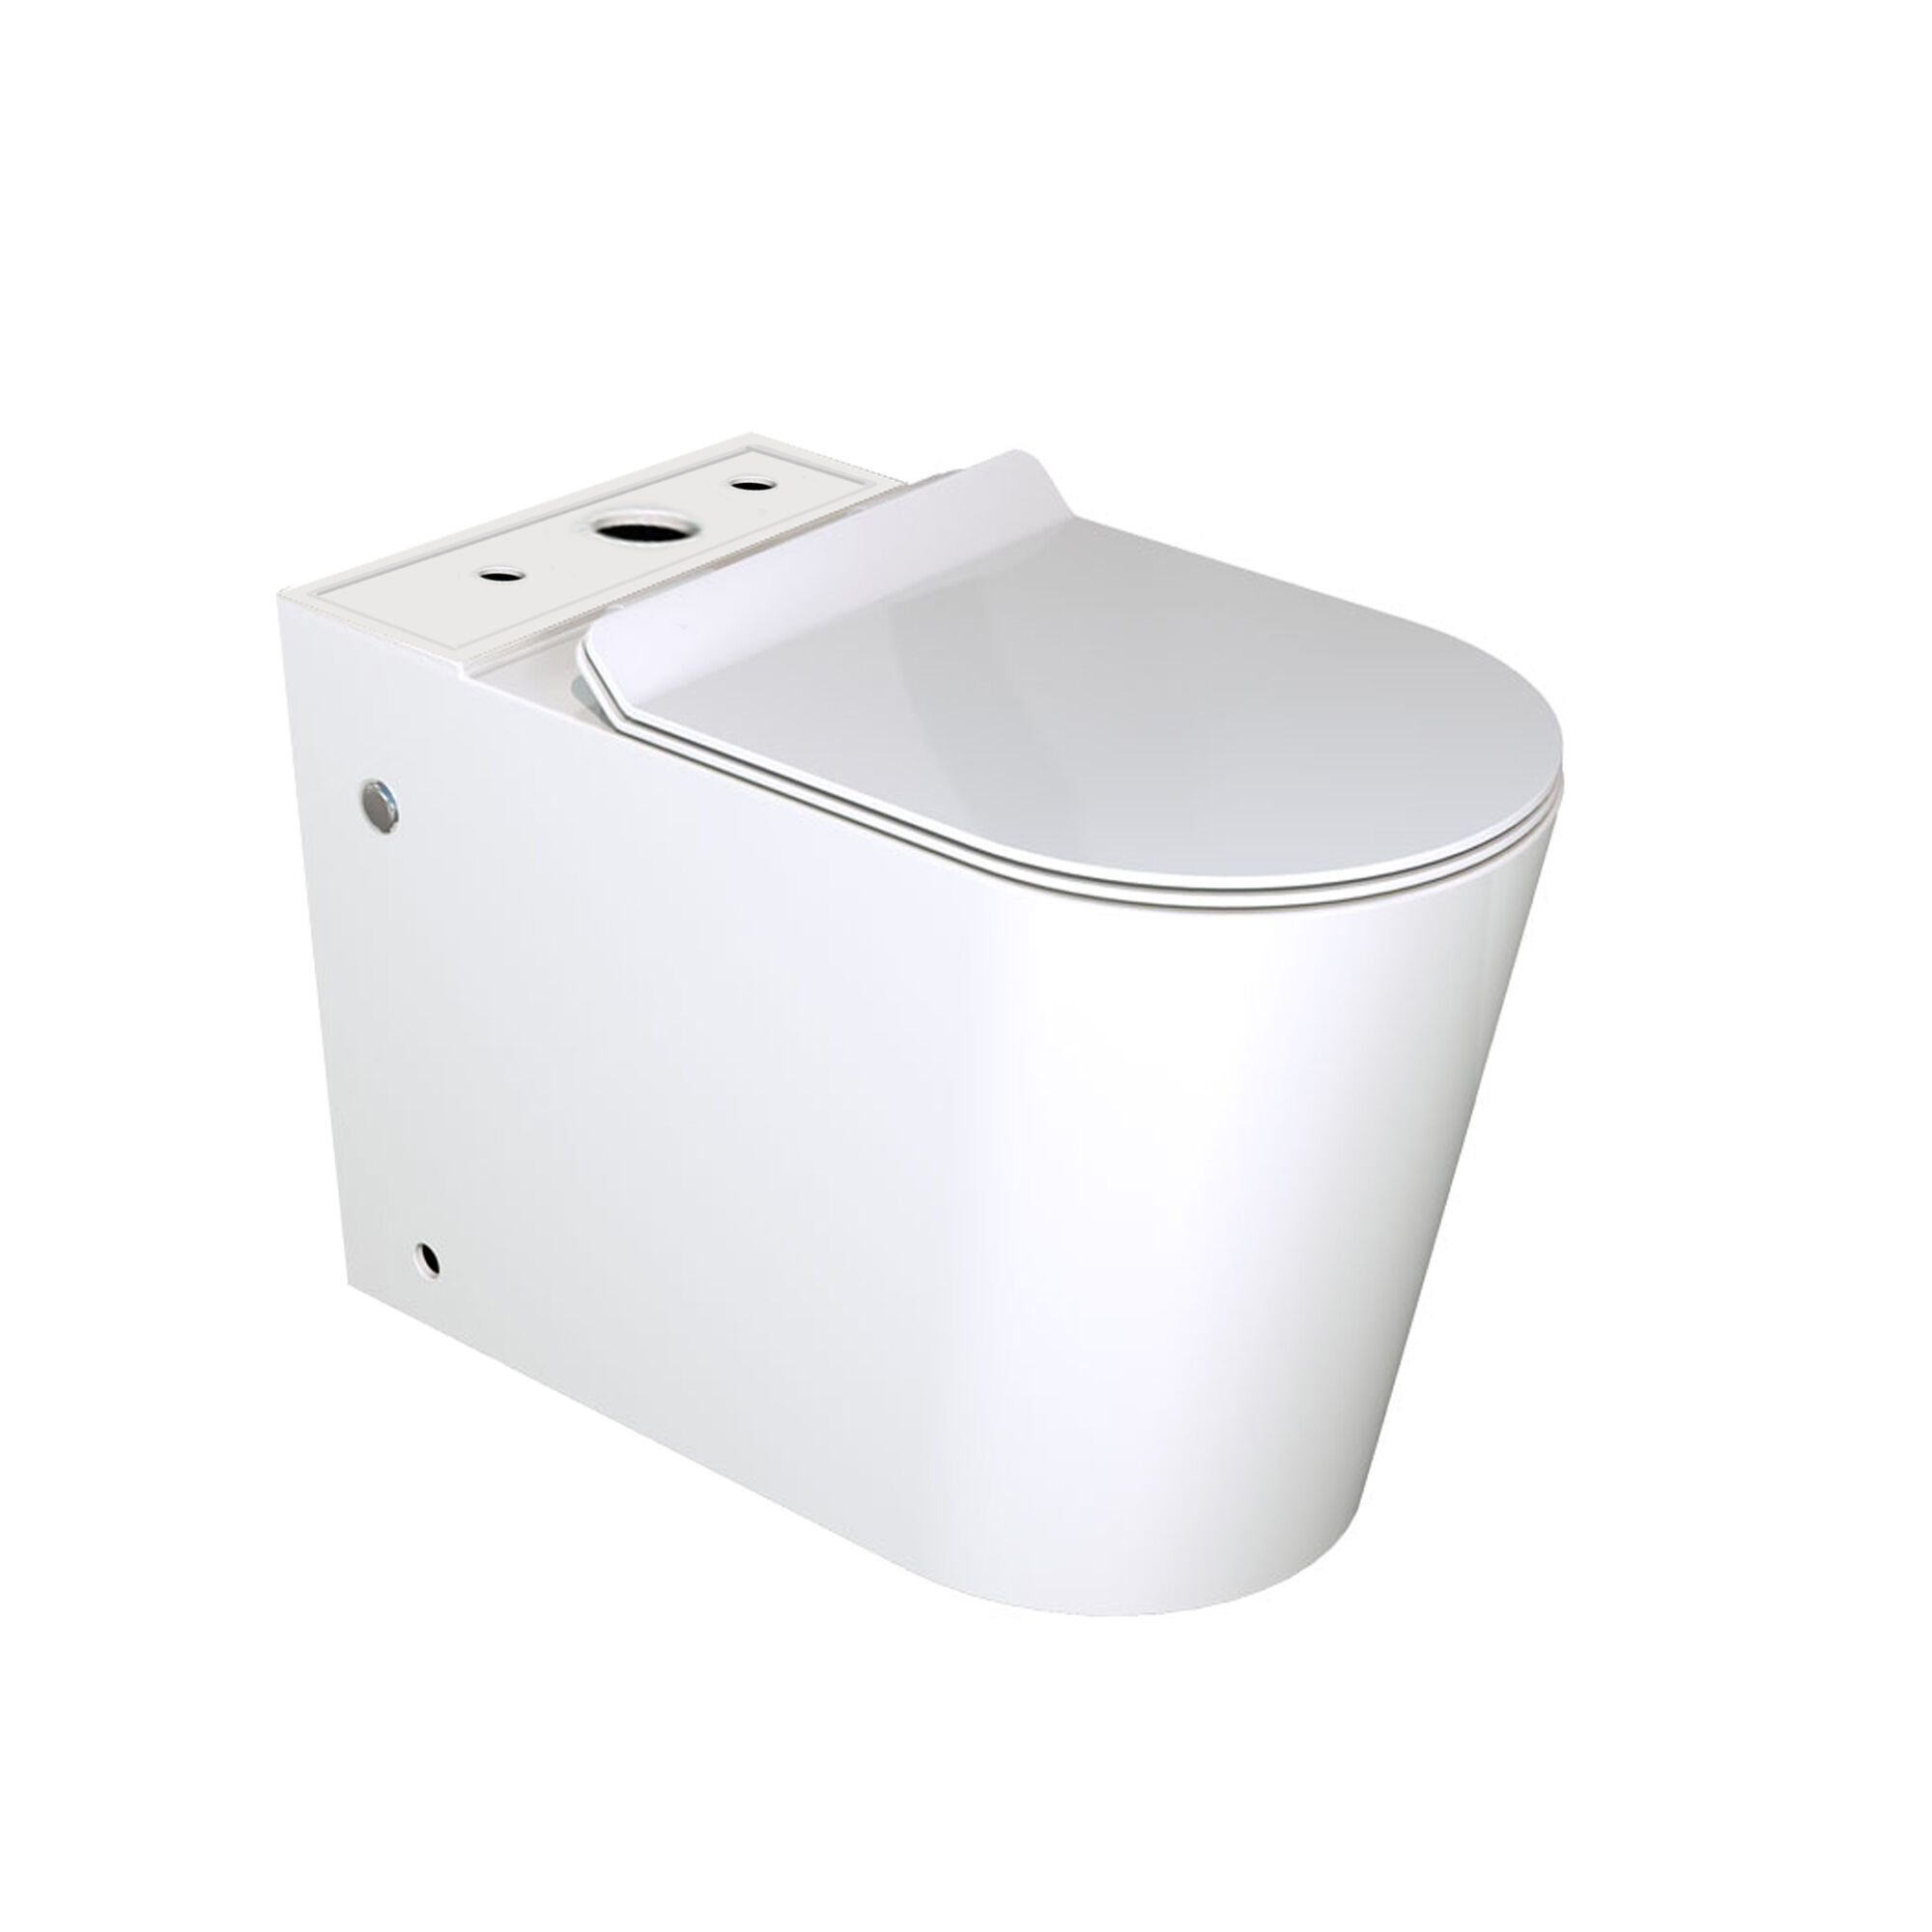 Luca Varess Luca Varess Santino staand toilet verhoogd hoogglans wit randloos - toiletpan + zitting